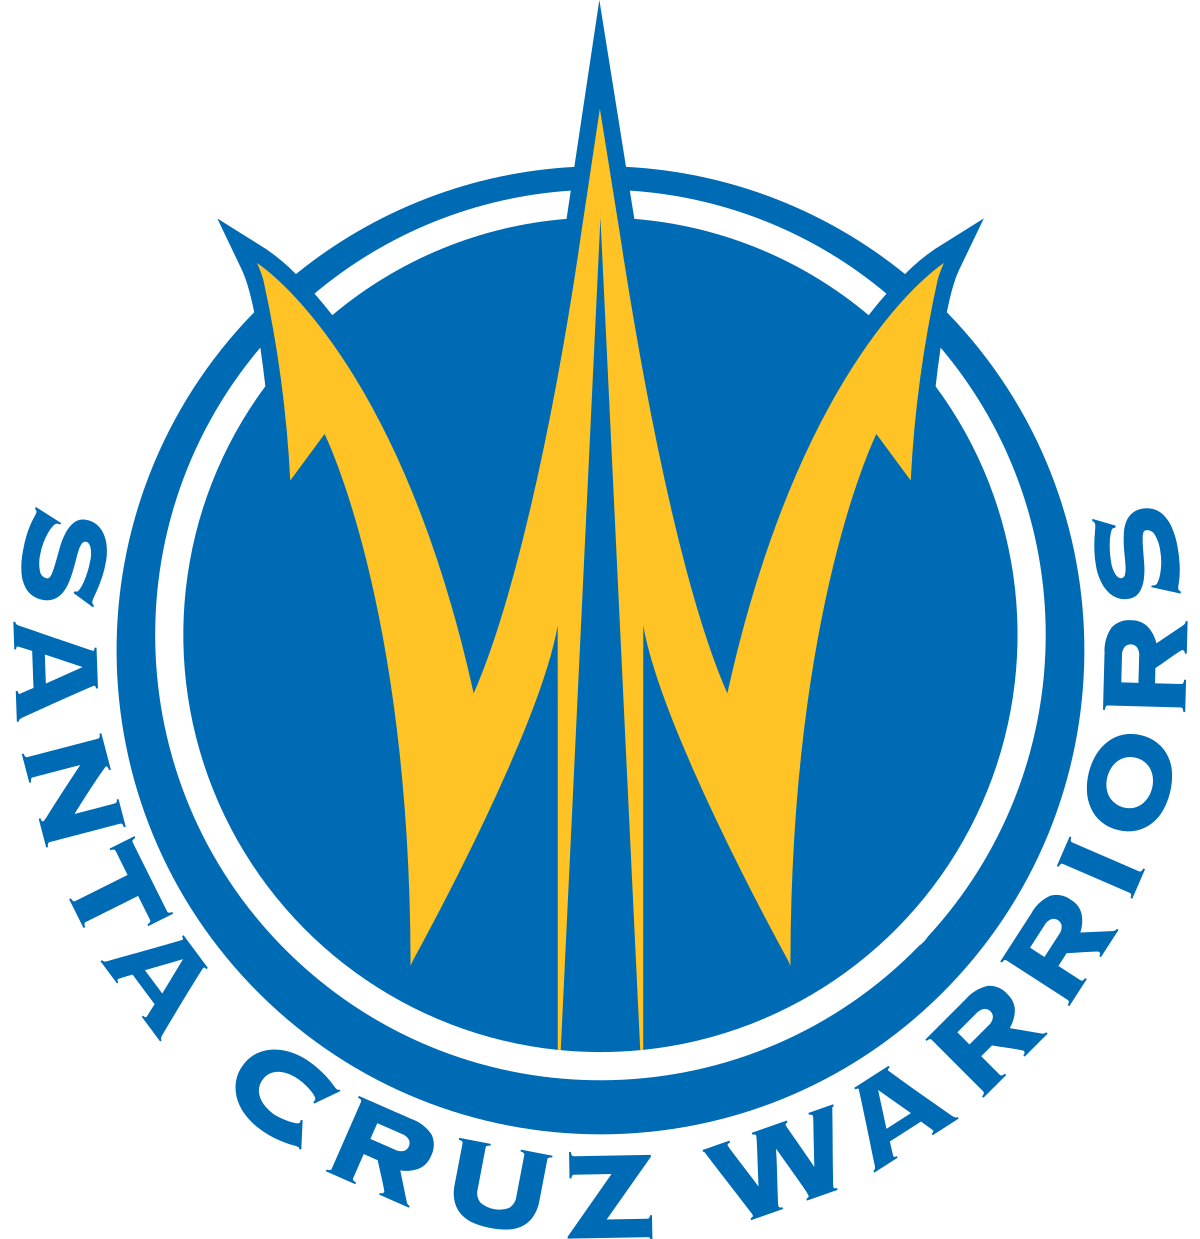 Santa Cruz Warriors poised for season opener